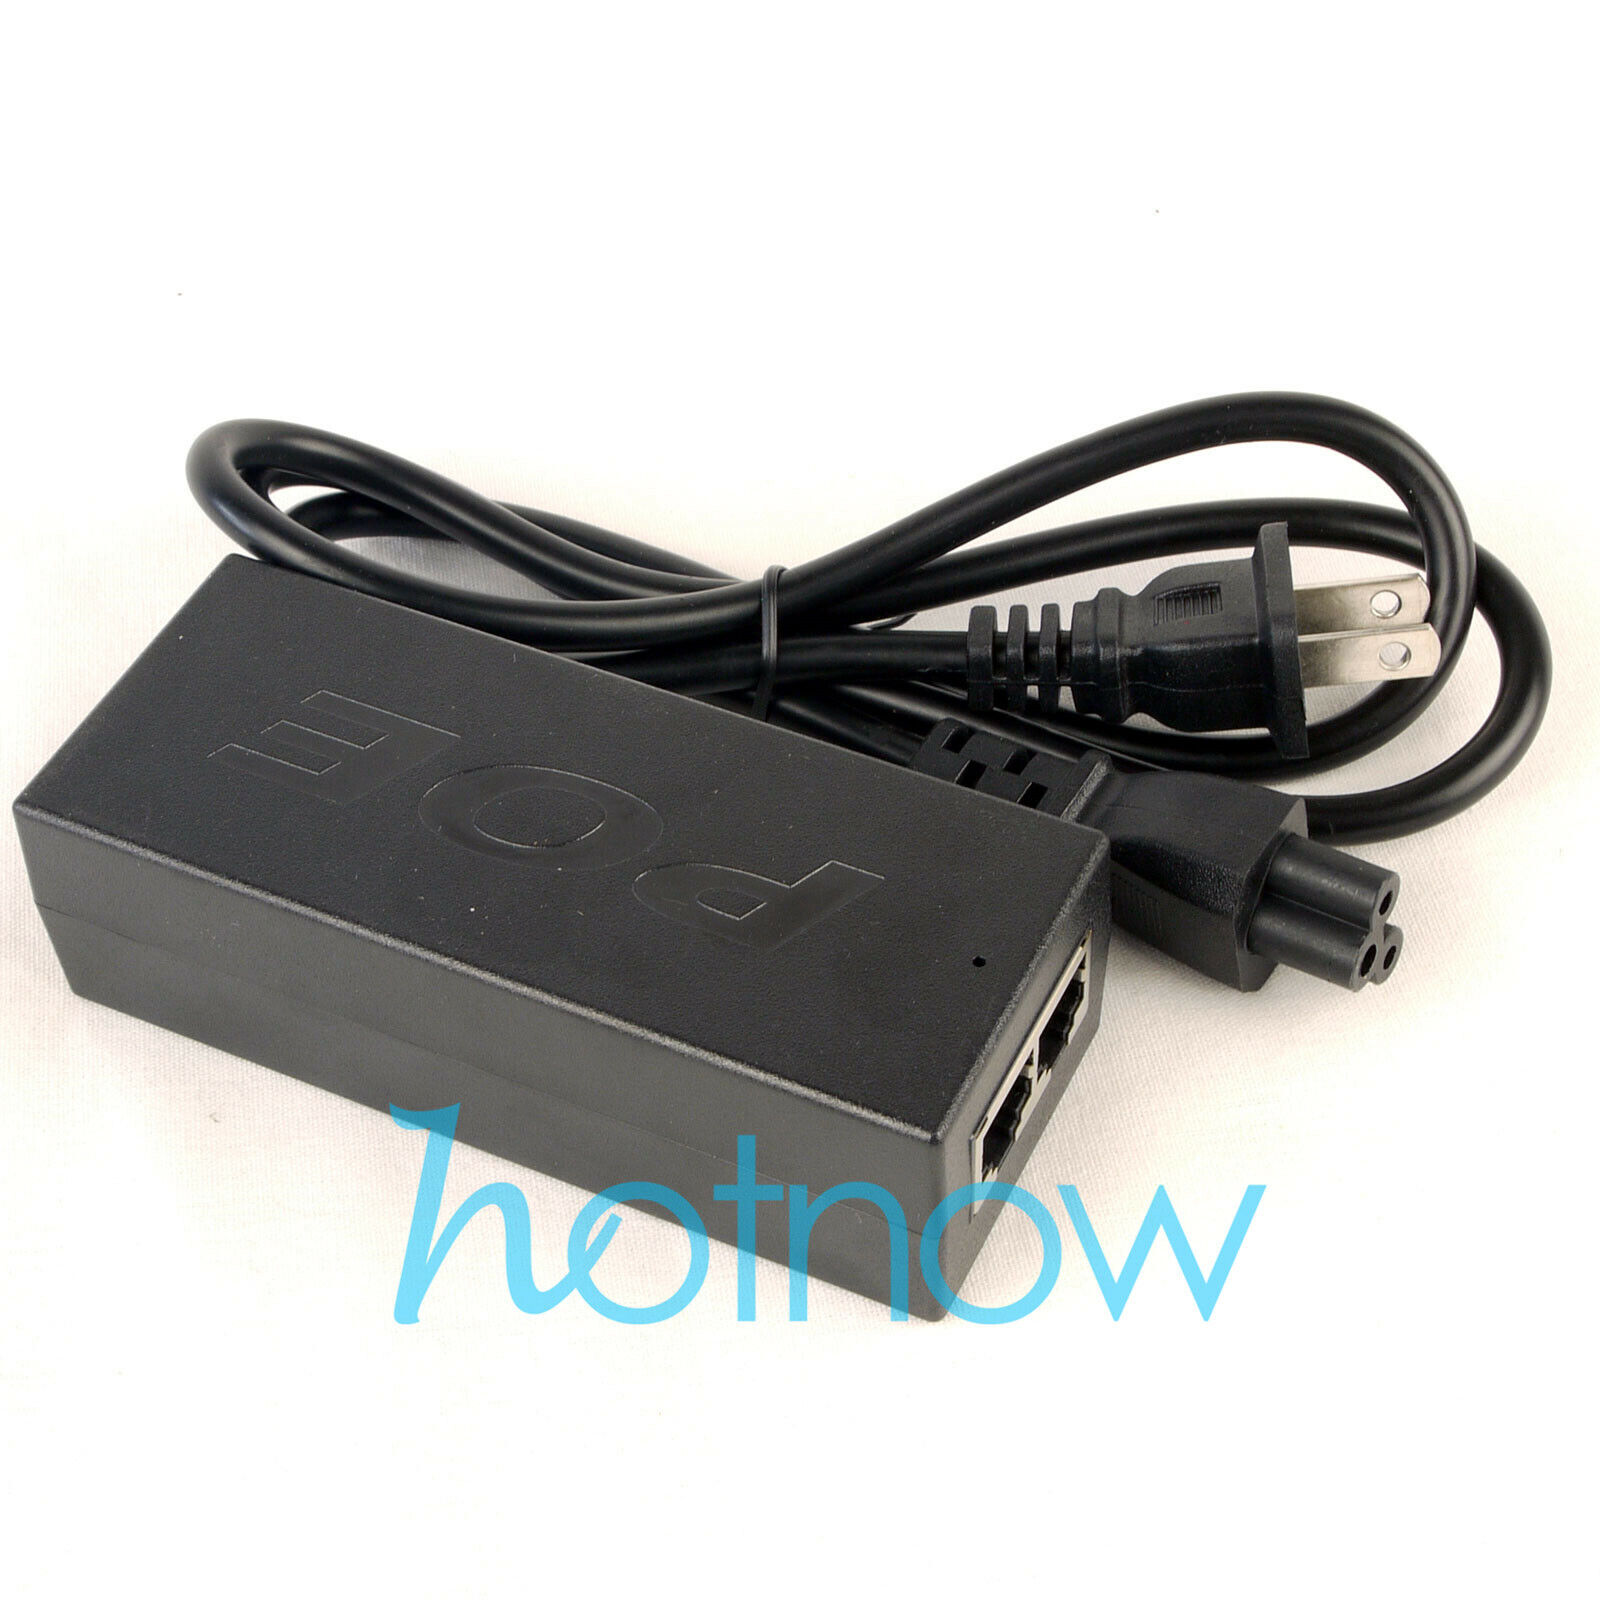 Gigabit PoE Injector 802.3at PoE+ Adapter Power Over Ethernet unifi AP 1000Mbps